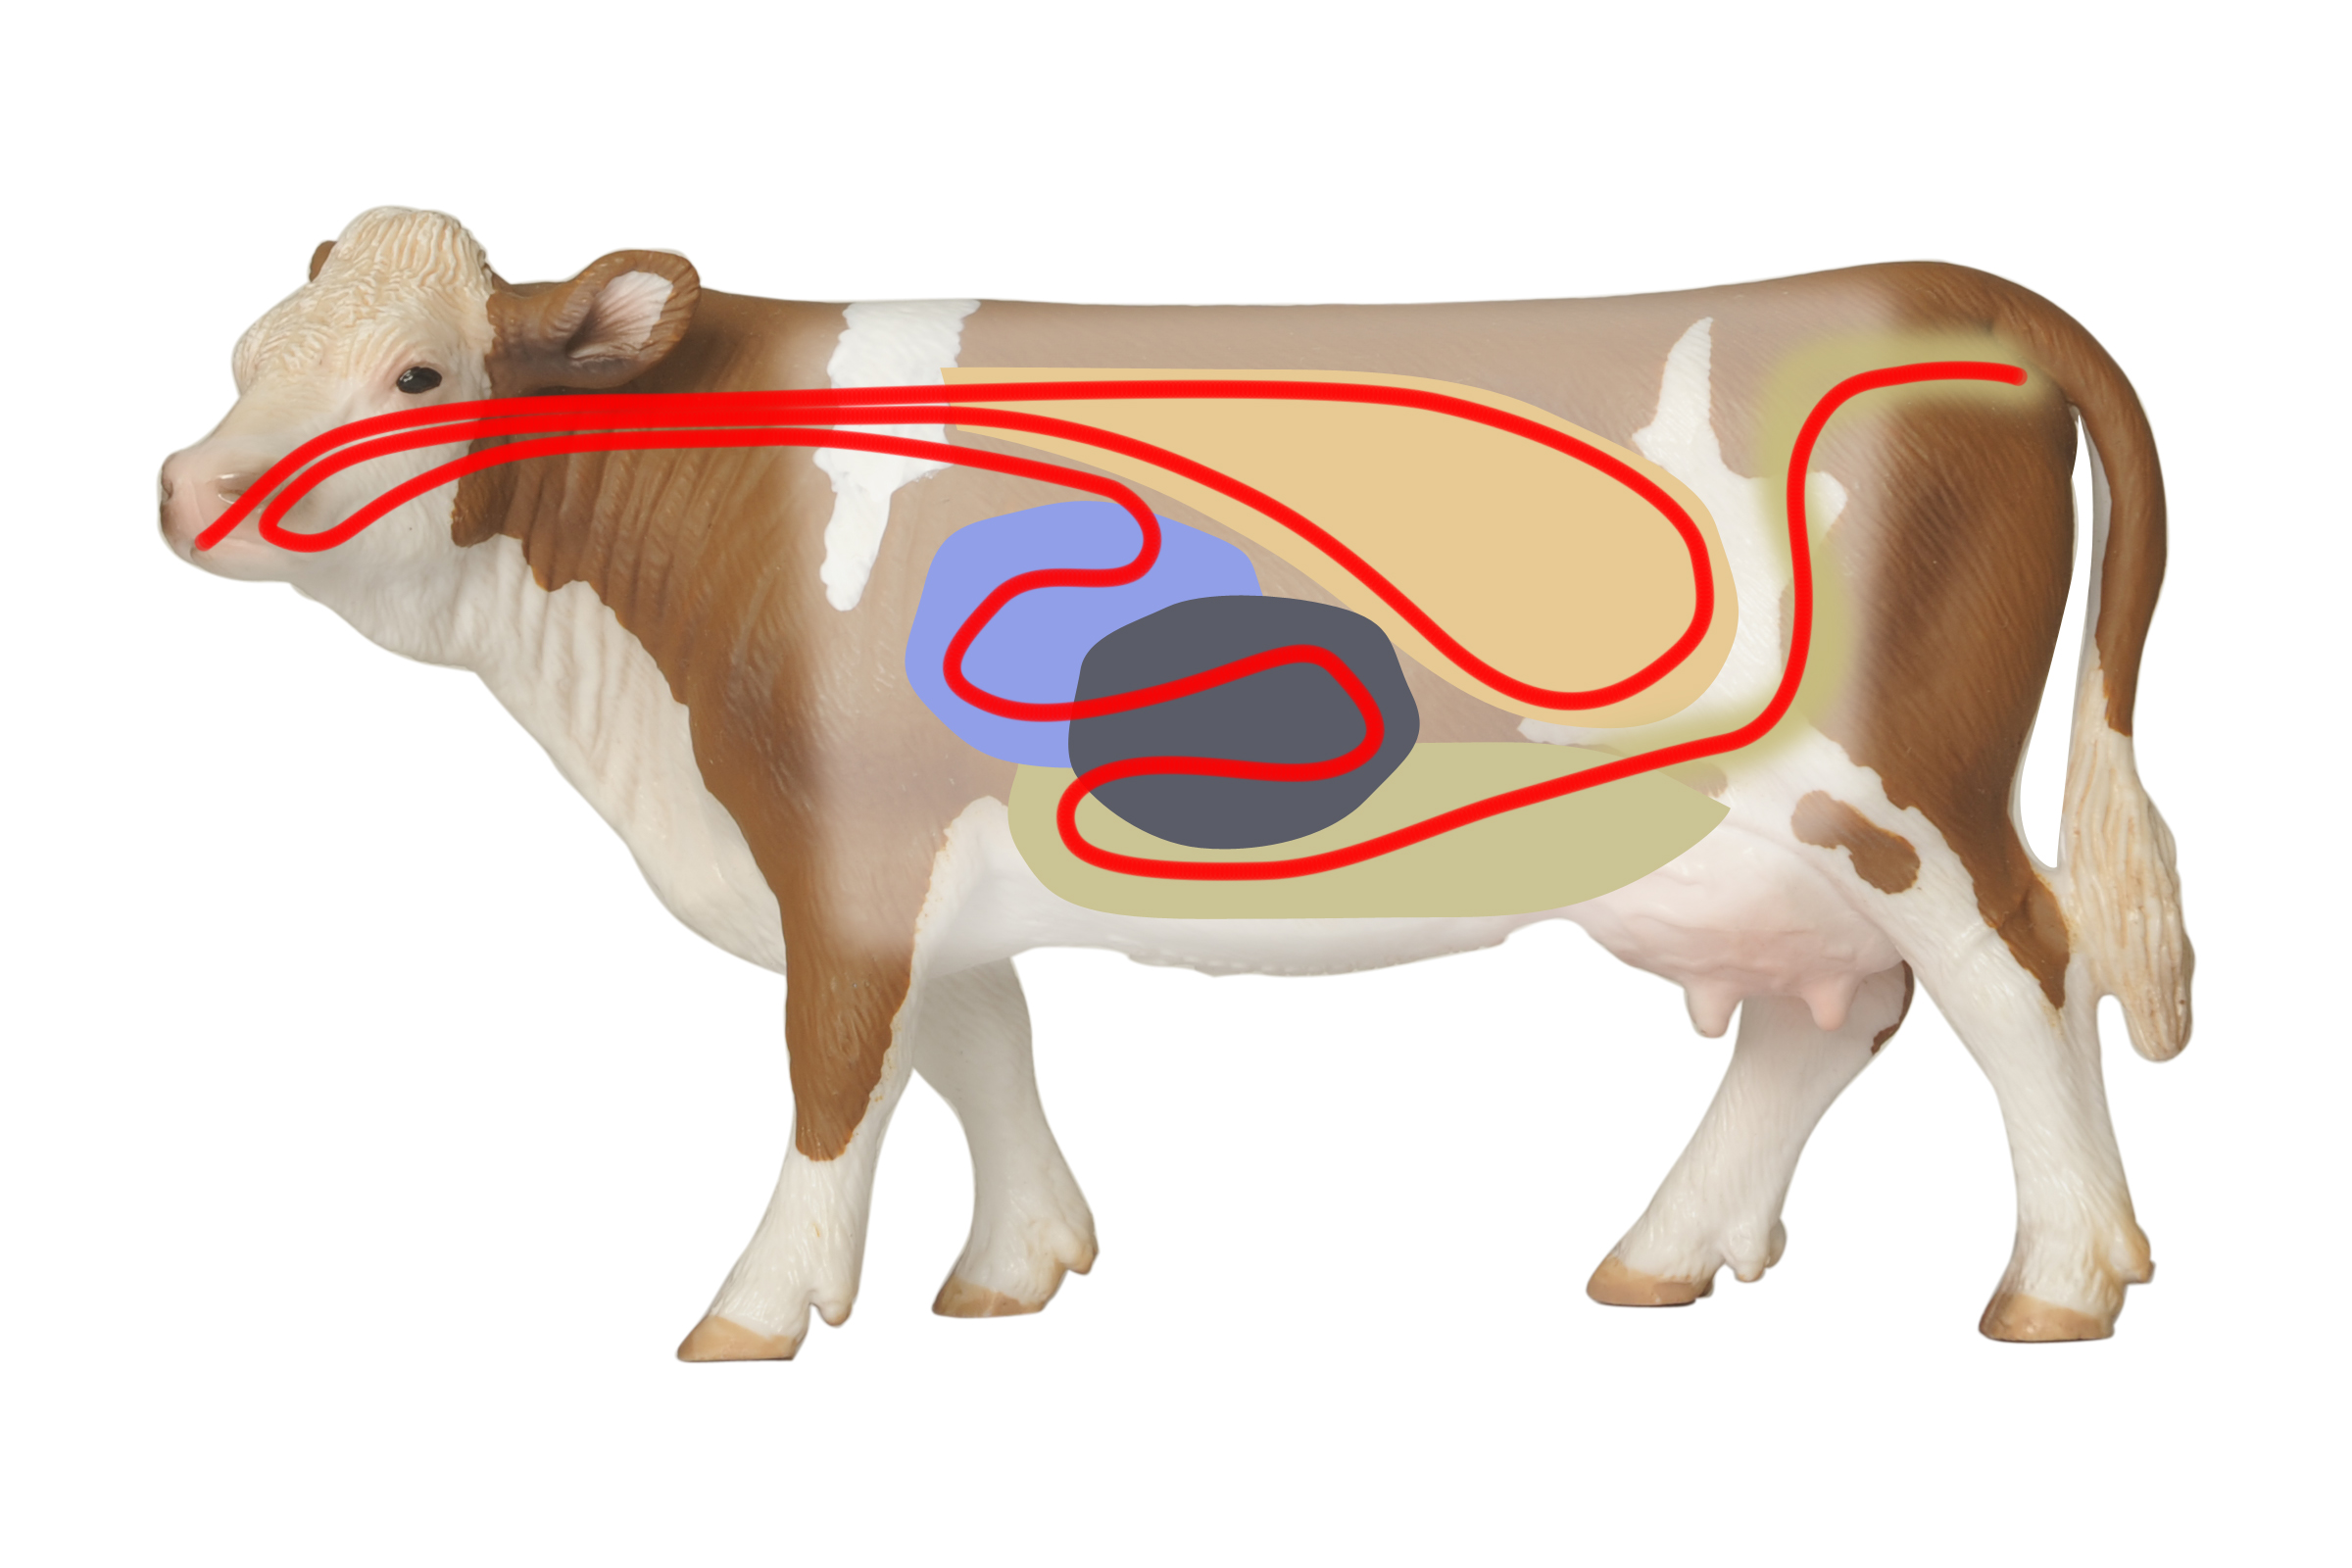 Grafik: Verdauung des Rindes